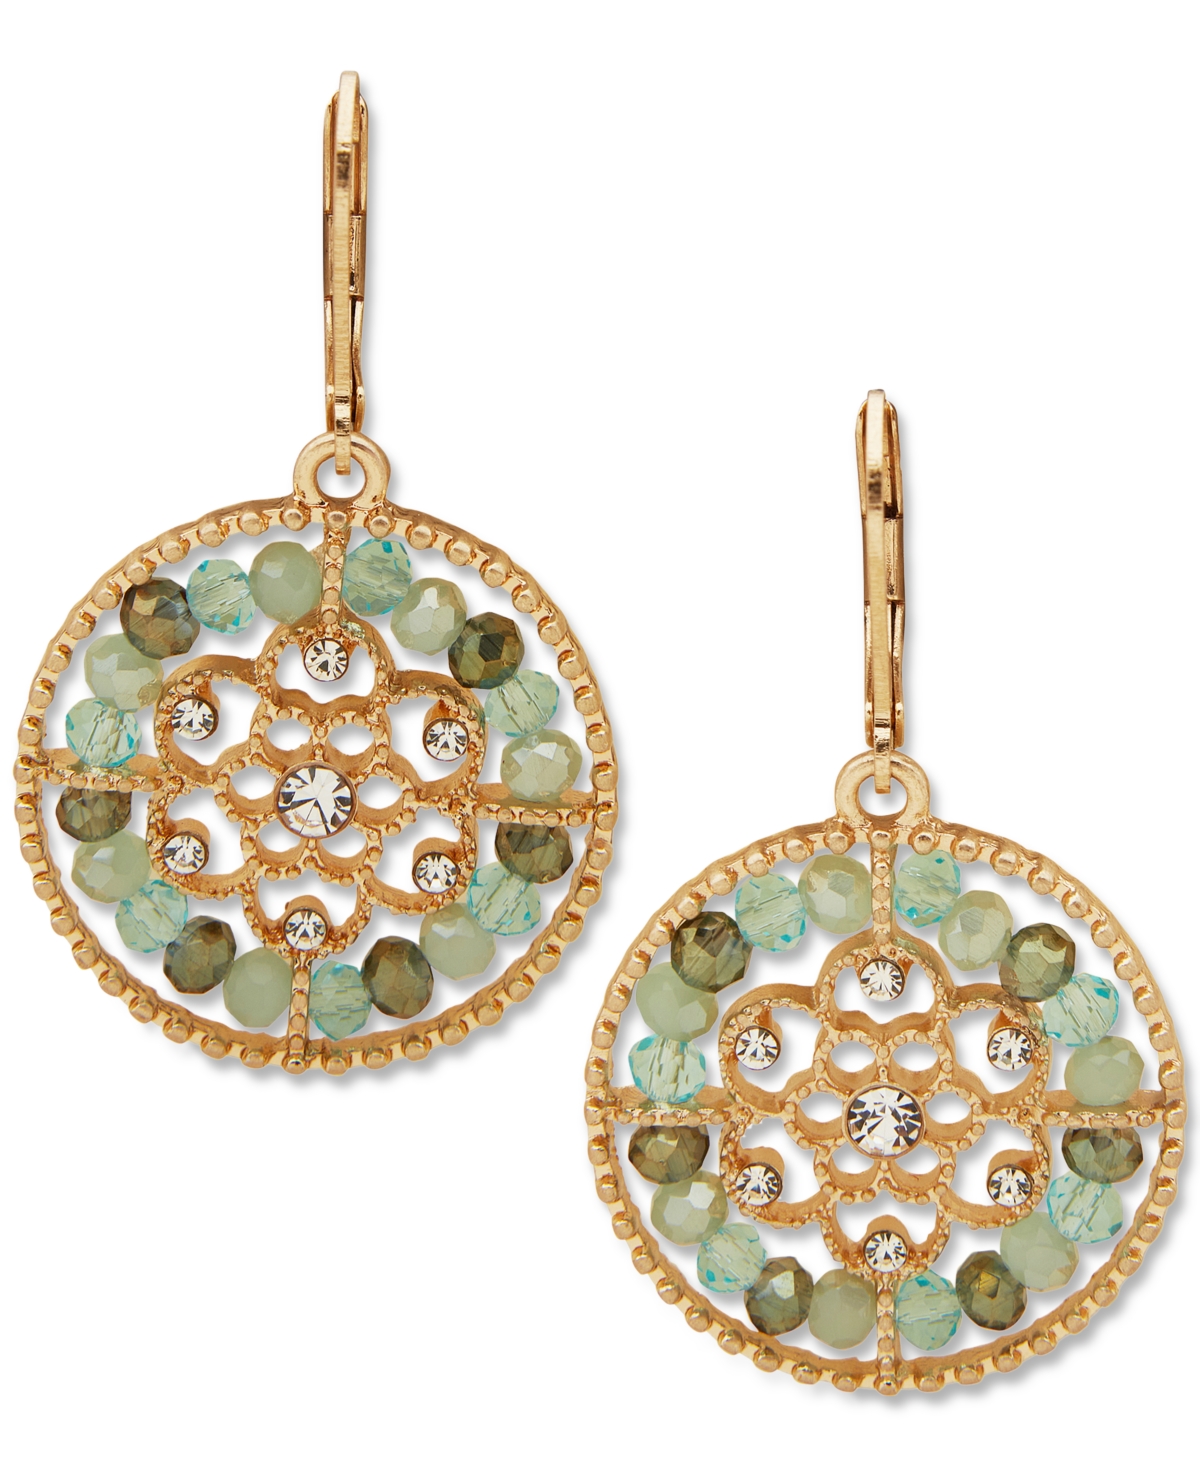 Gold-Tone Pave & Bead Flower Round Drop Earrings - Seafoam